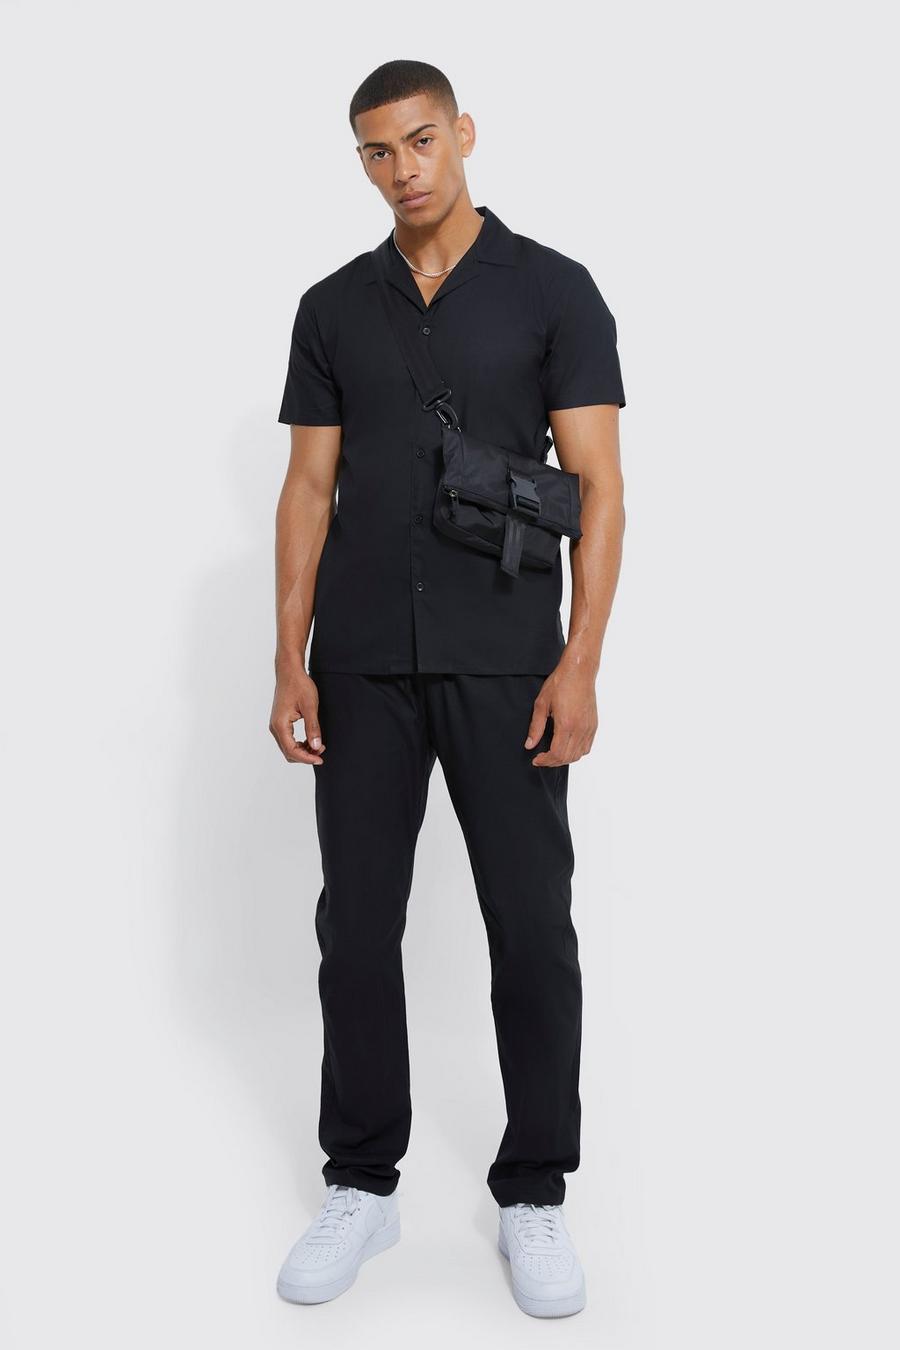 Pantalón ajustado y camisa Regular técnica elástica de manga corta, Black